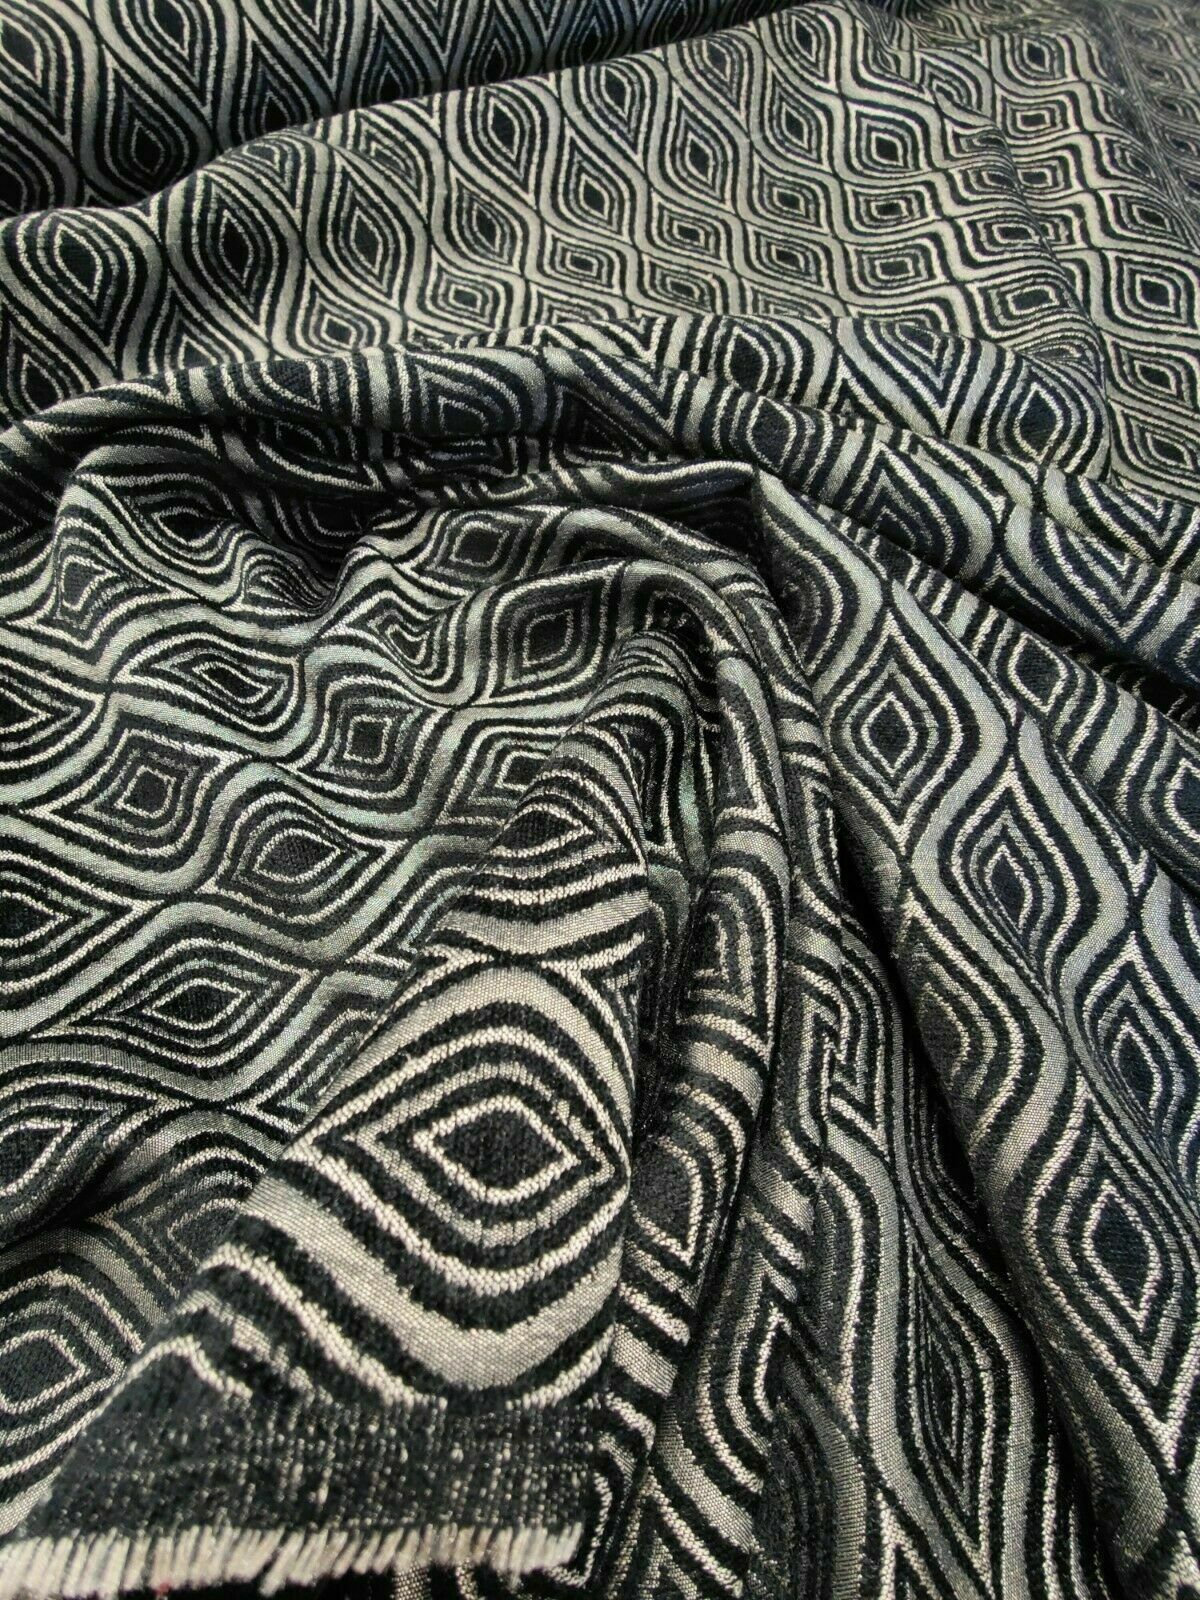 Porter & Stone Giovanni Nior Curtain Upholstery Fabric 4 Metres